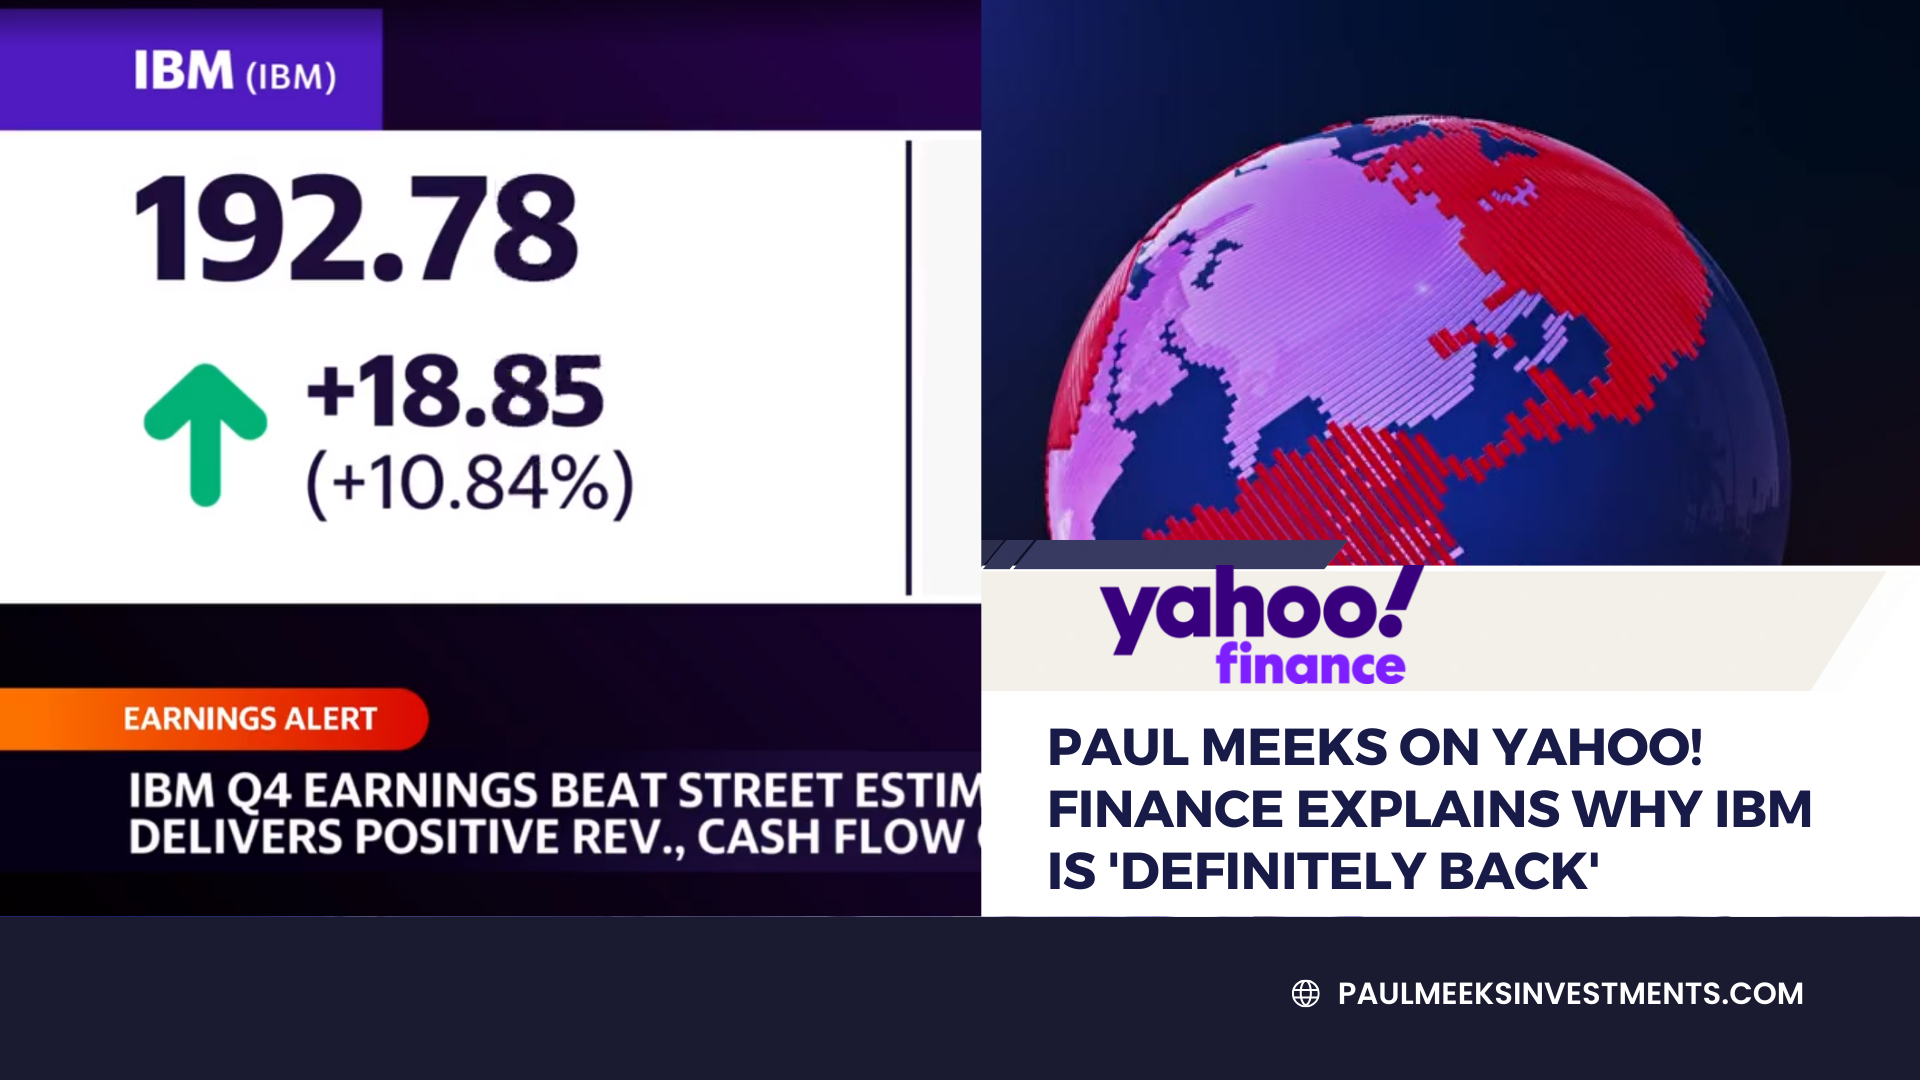 Paul Meeks on Yahoo! Finance Explains Why IBM is ‘Definitely Back’